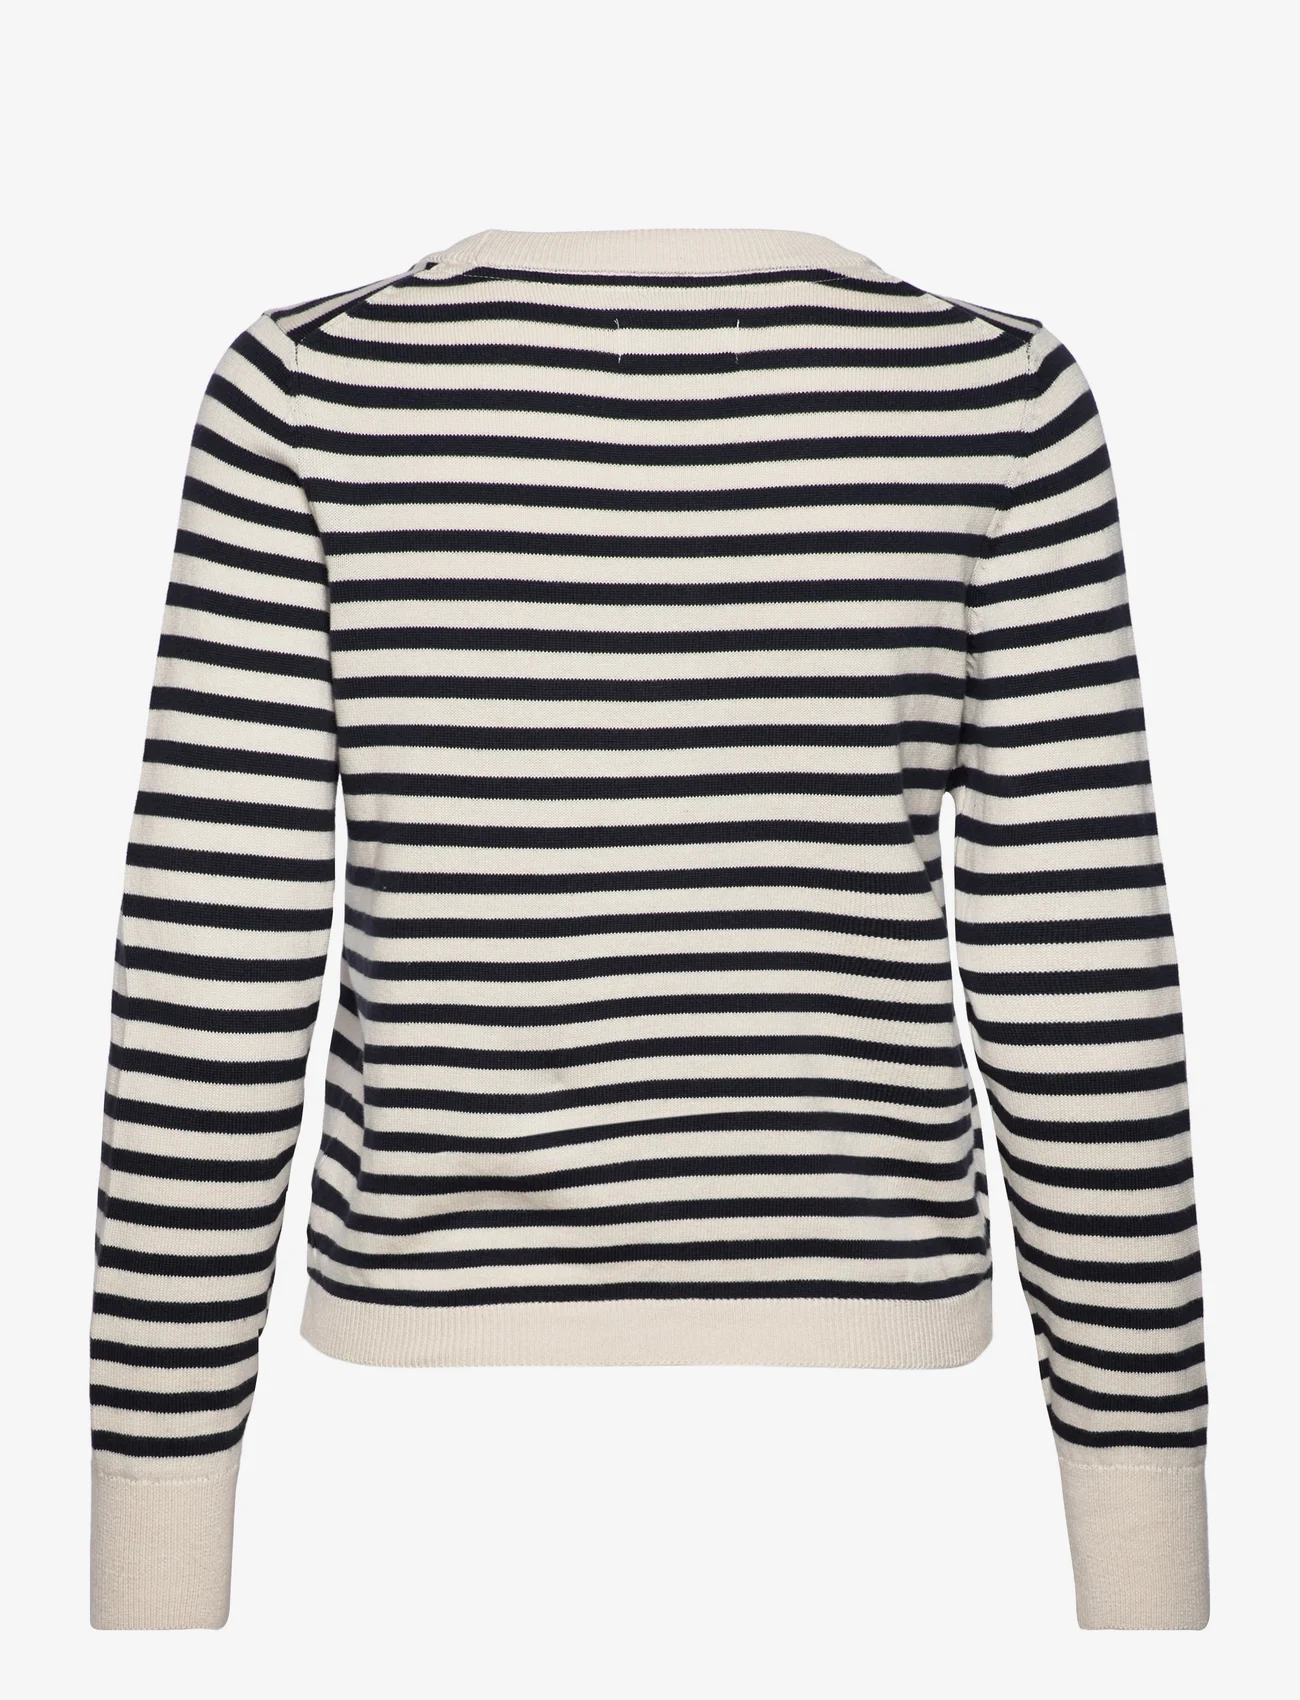 Part Two - GertiePW PU - sweaters - whitecap gray stripe - 1